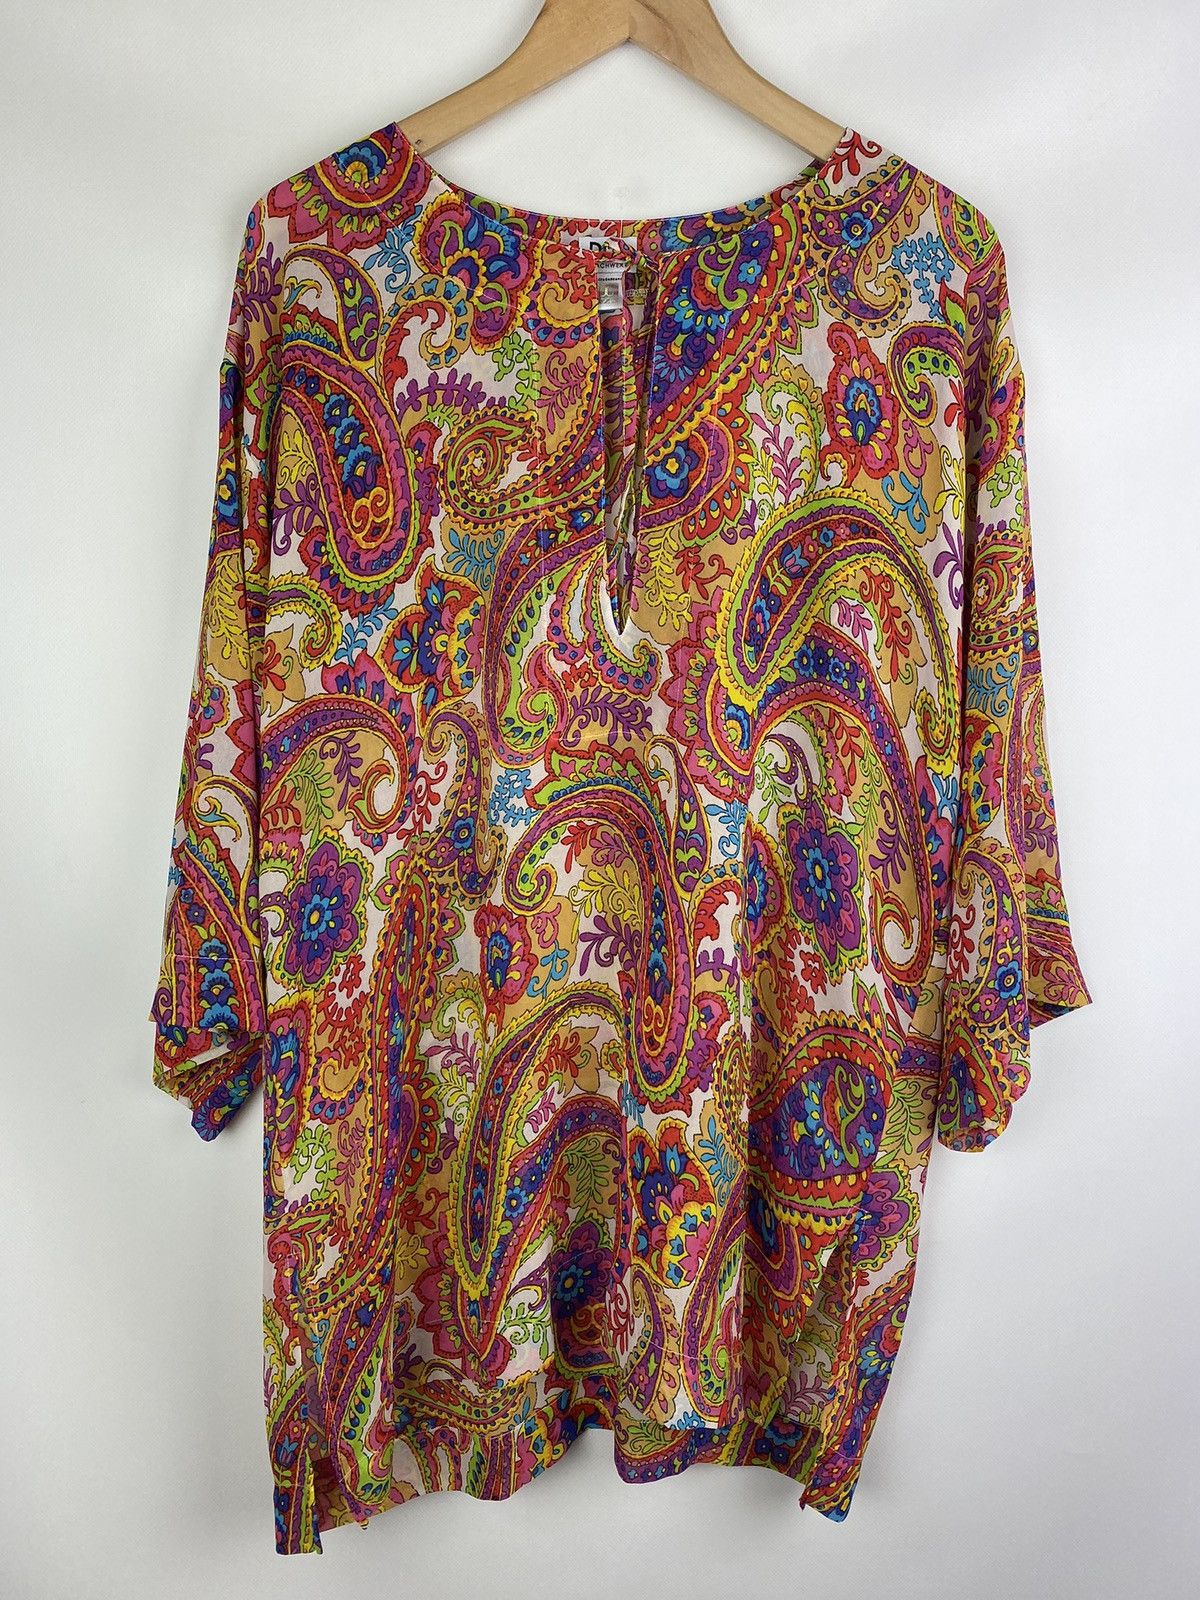 Dolce u0026 Gabbana Dolce u0026 Gabbana ladies Paisley patterned mesh tunic blouse  | Grailed